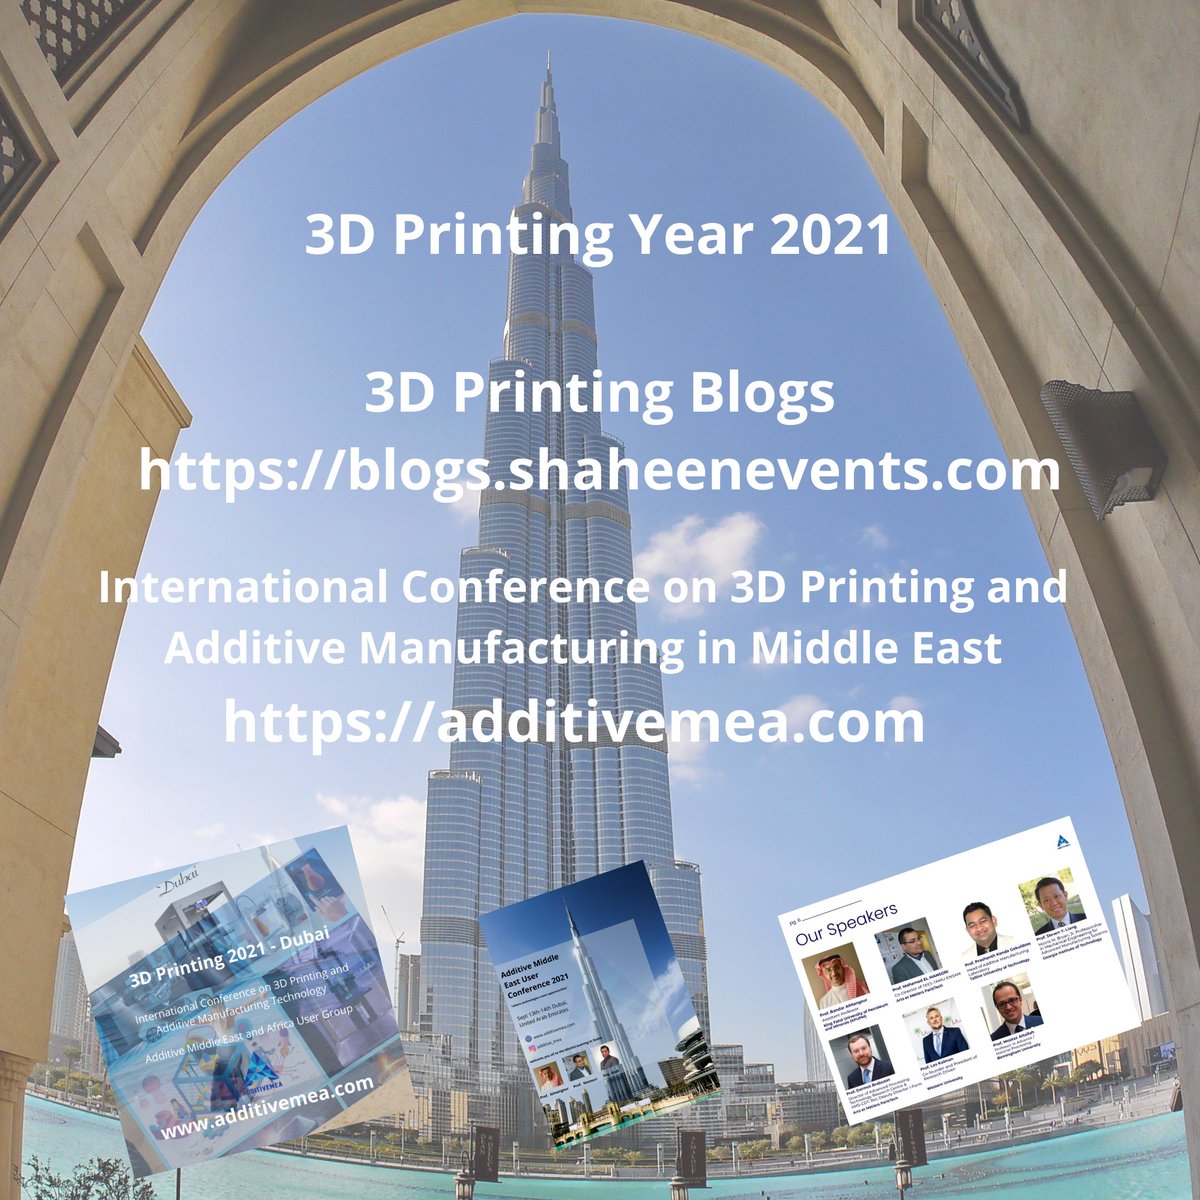 #3Dprinting 2021
additivemea.com
#additive #ebm #DED #Industrial #innovation #manufacturing #automotive #Government #Dubai #Conference #3dprintingawards #additivemea